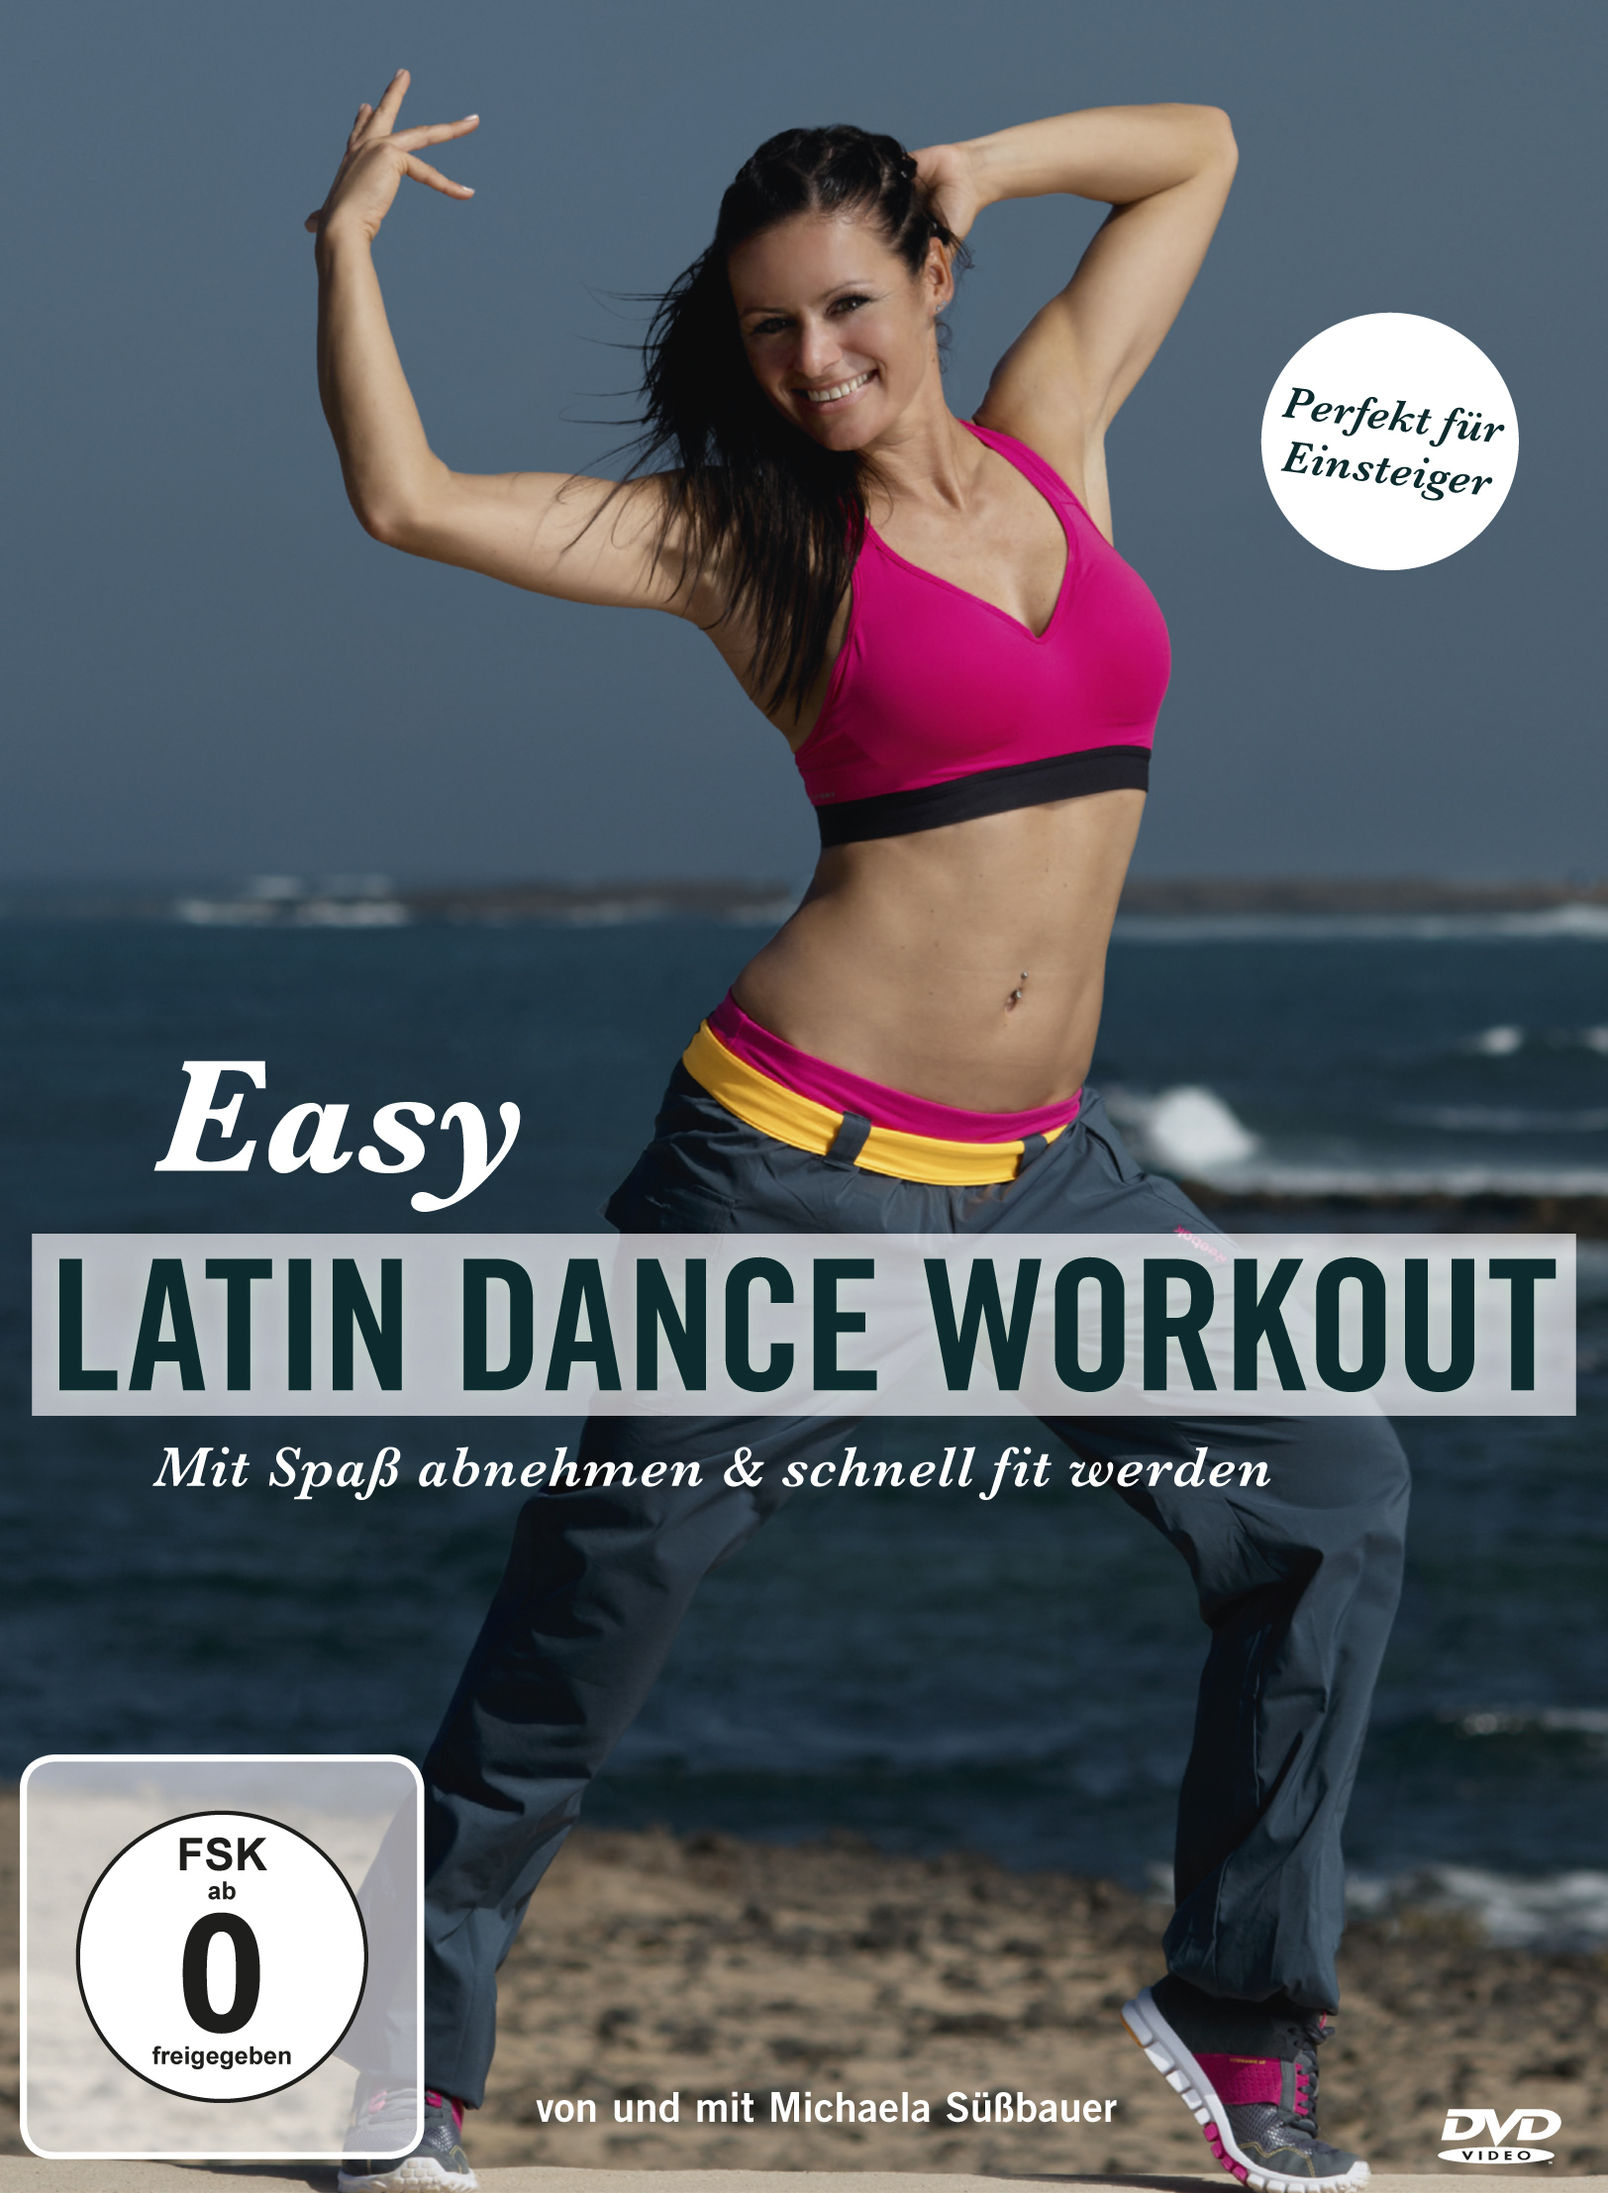 Easy Latin Dance Workout DVD bei Weltbild.ch bestellen